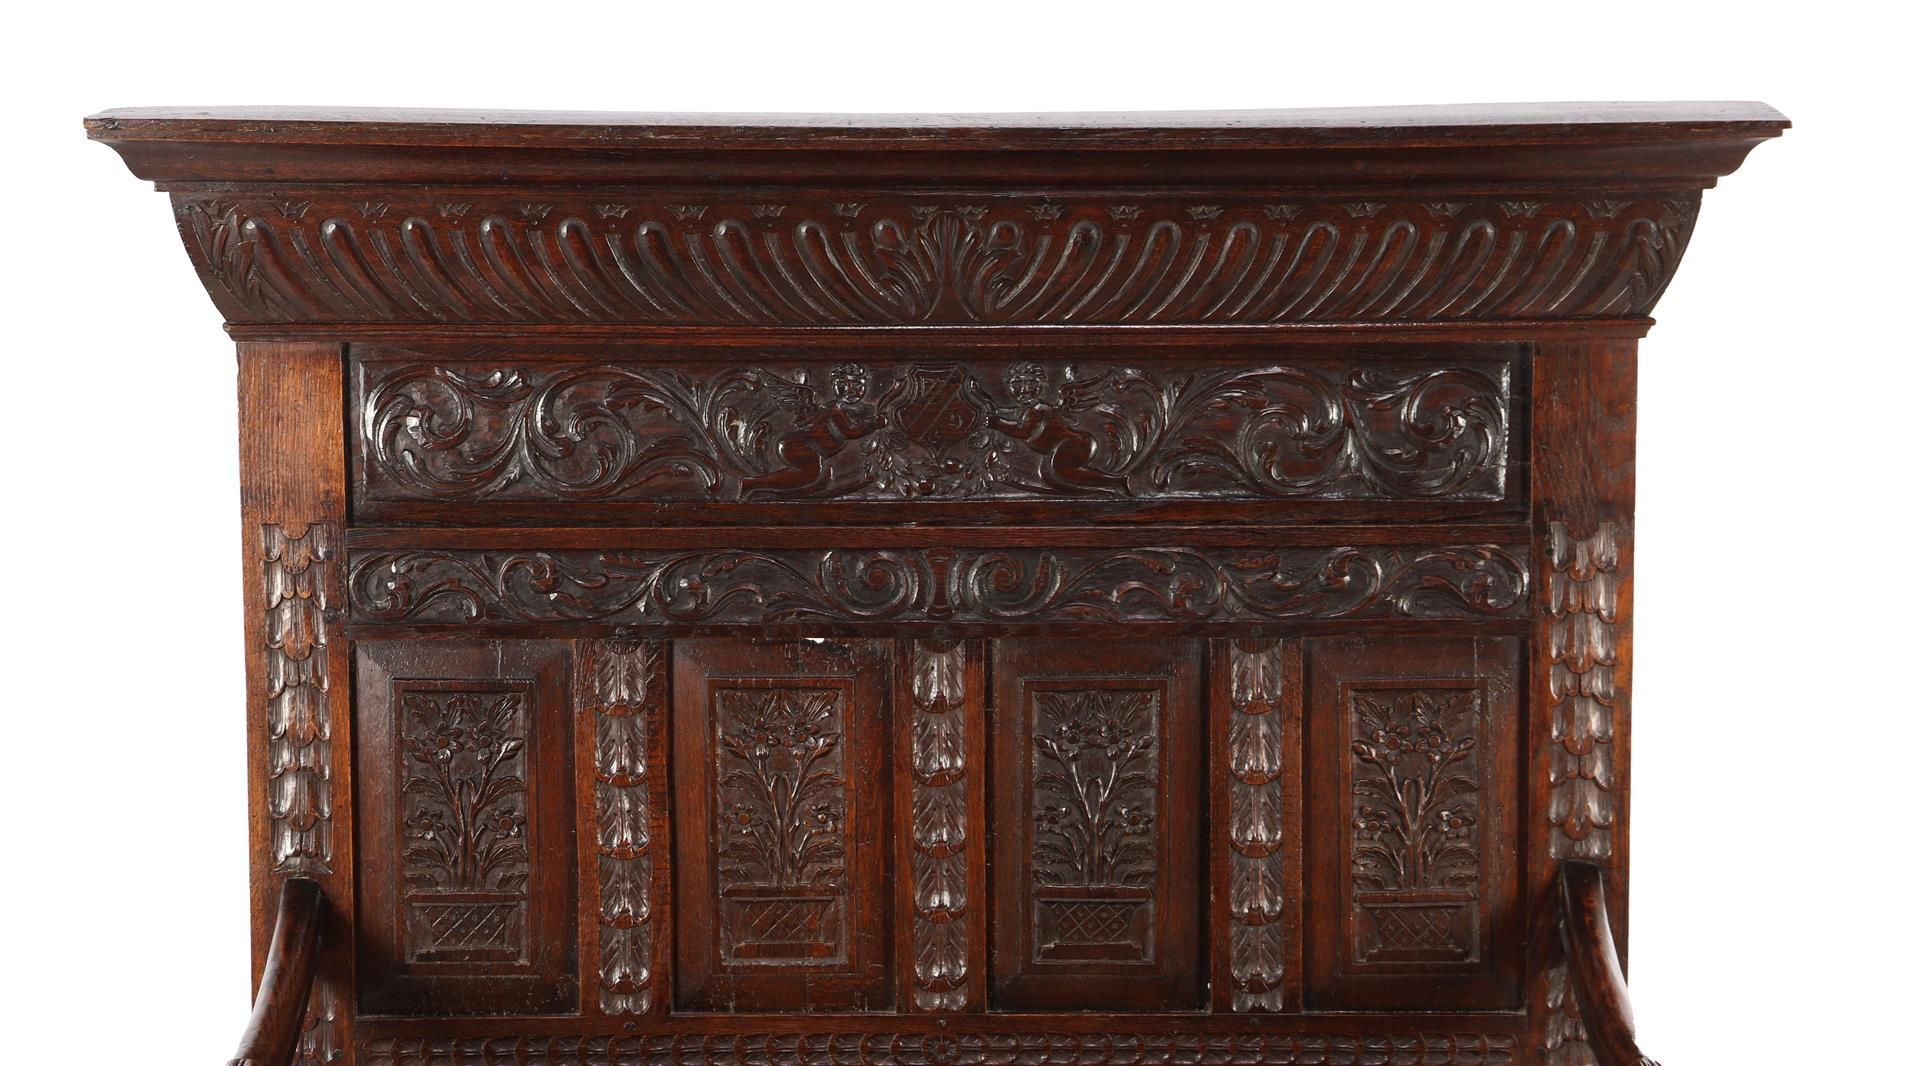 Oak richly upholstered hall bench - Image 2 of 2